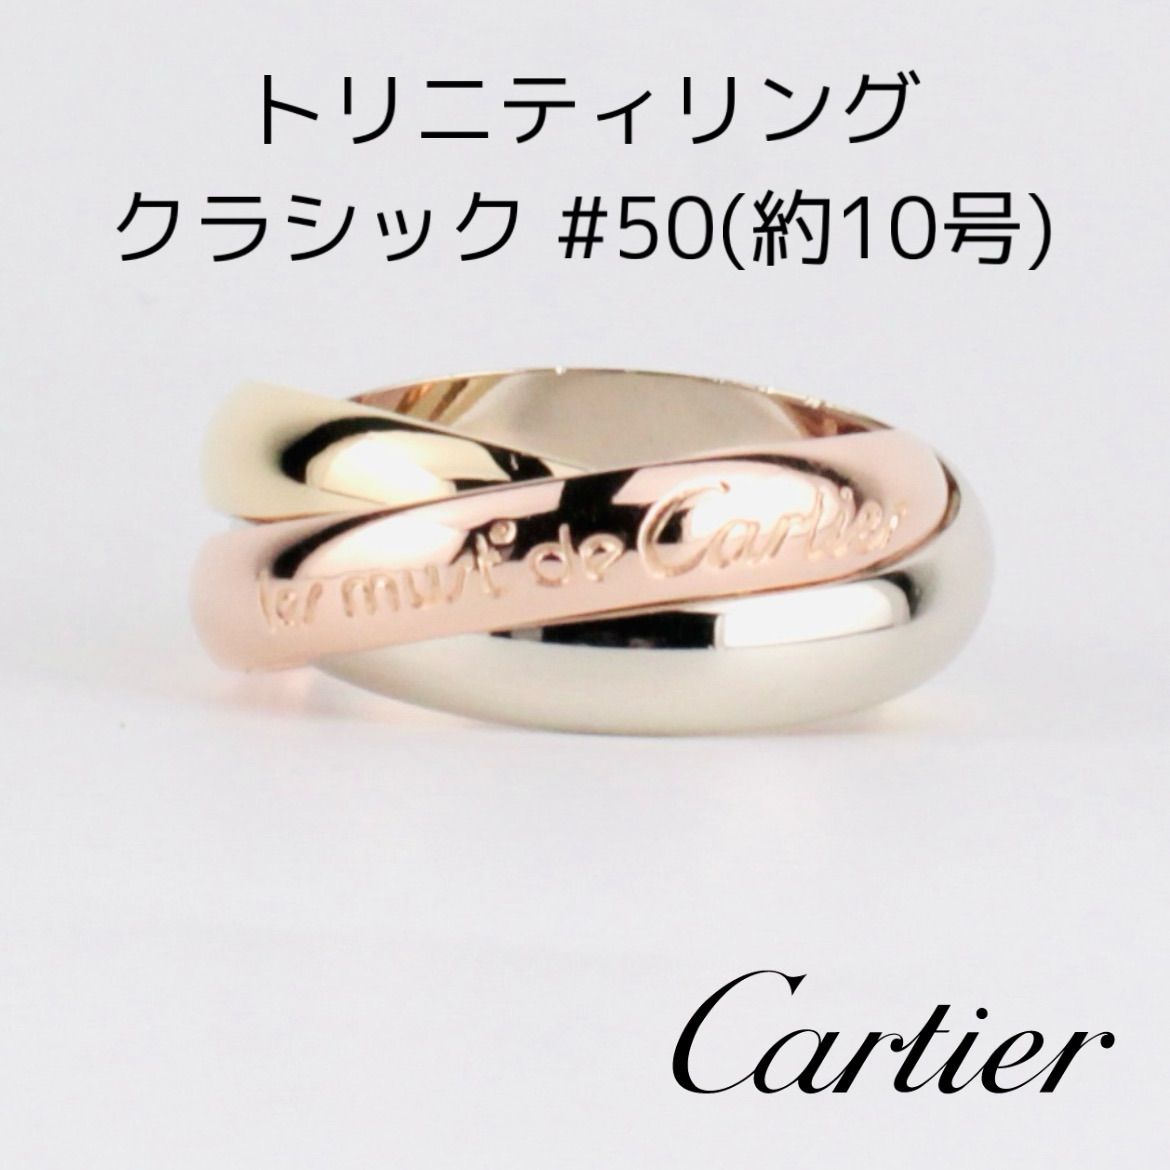 Cartier カルティエ トリニティ リング 指輪 750 #50 10号 - メルカリ